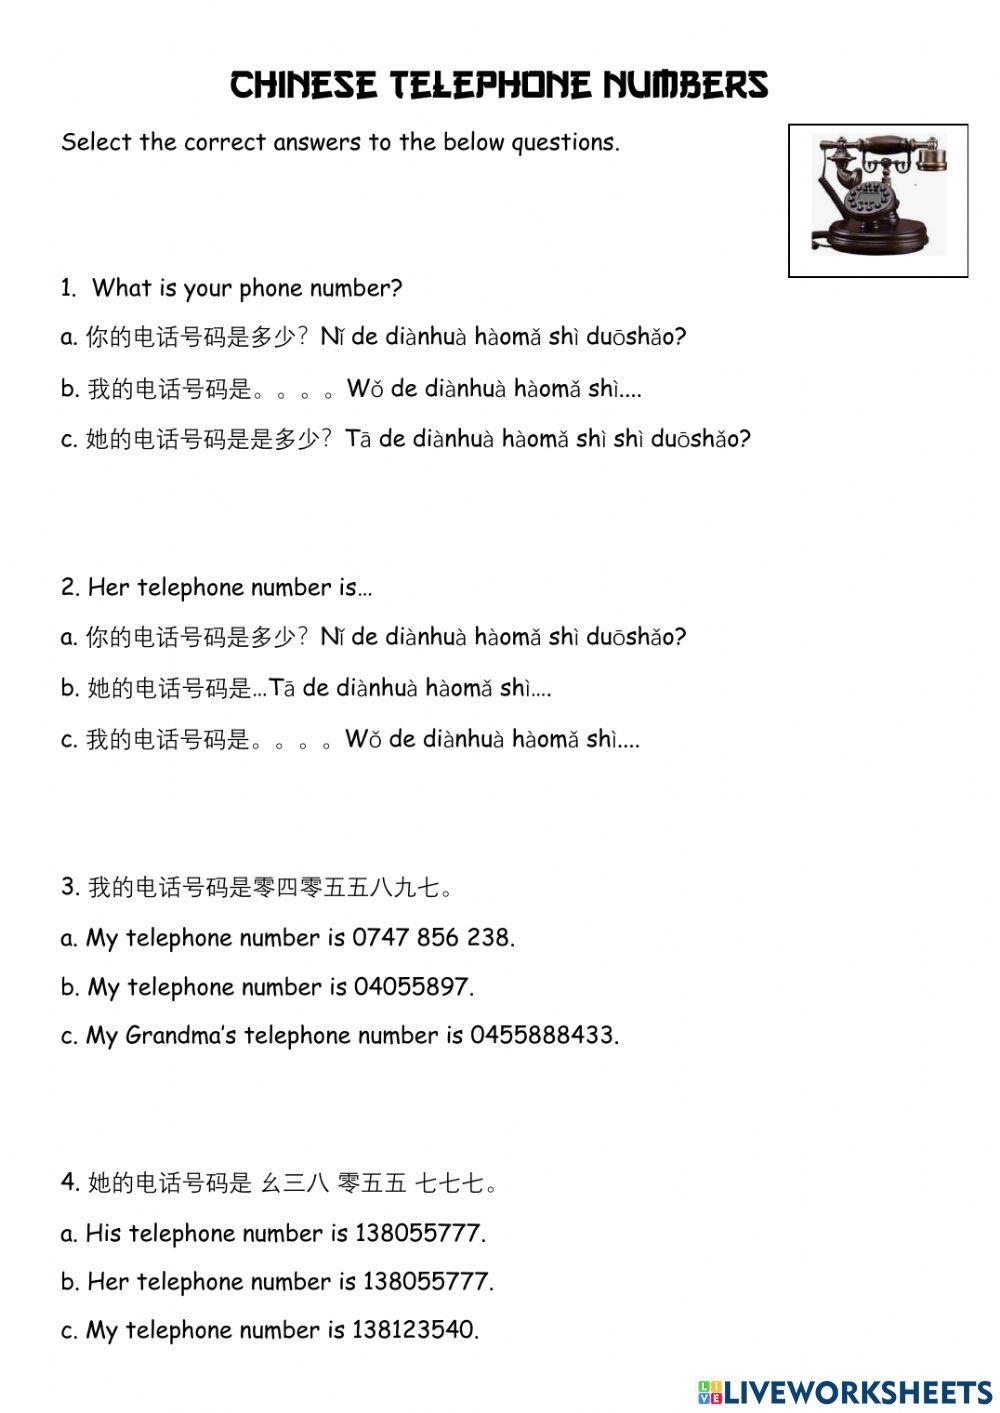 KSS Mandarin - Chinese telephone numbers worksheet | Live Worksheets